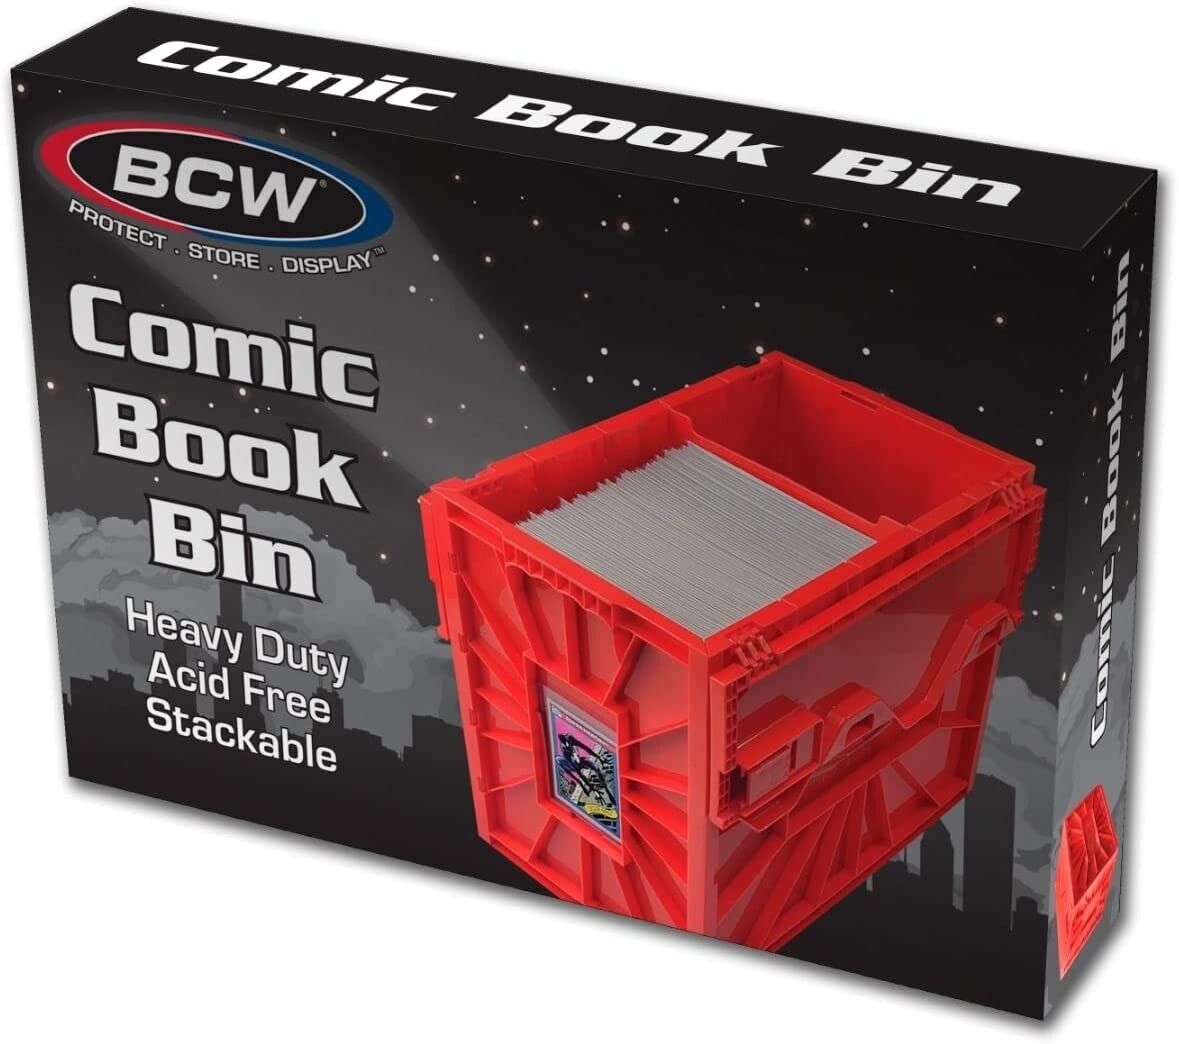 1 BCW Red Short Comic Book Bin - Heavy Duty Acid Free Plastic Stackable Box 